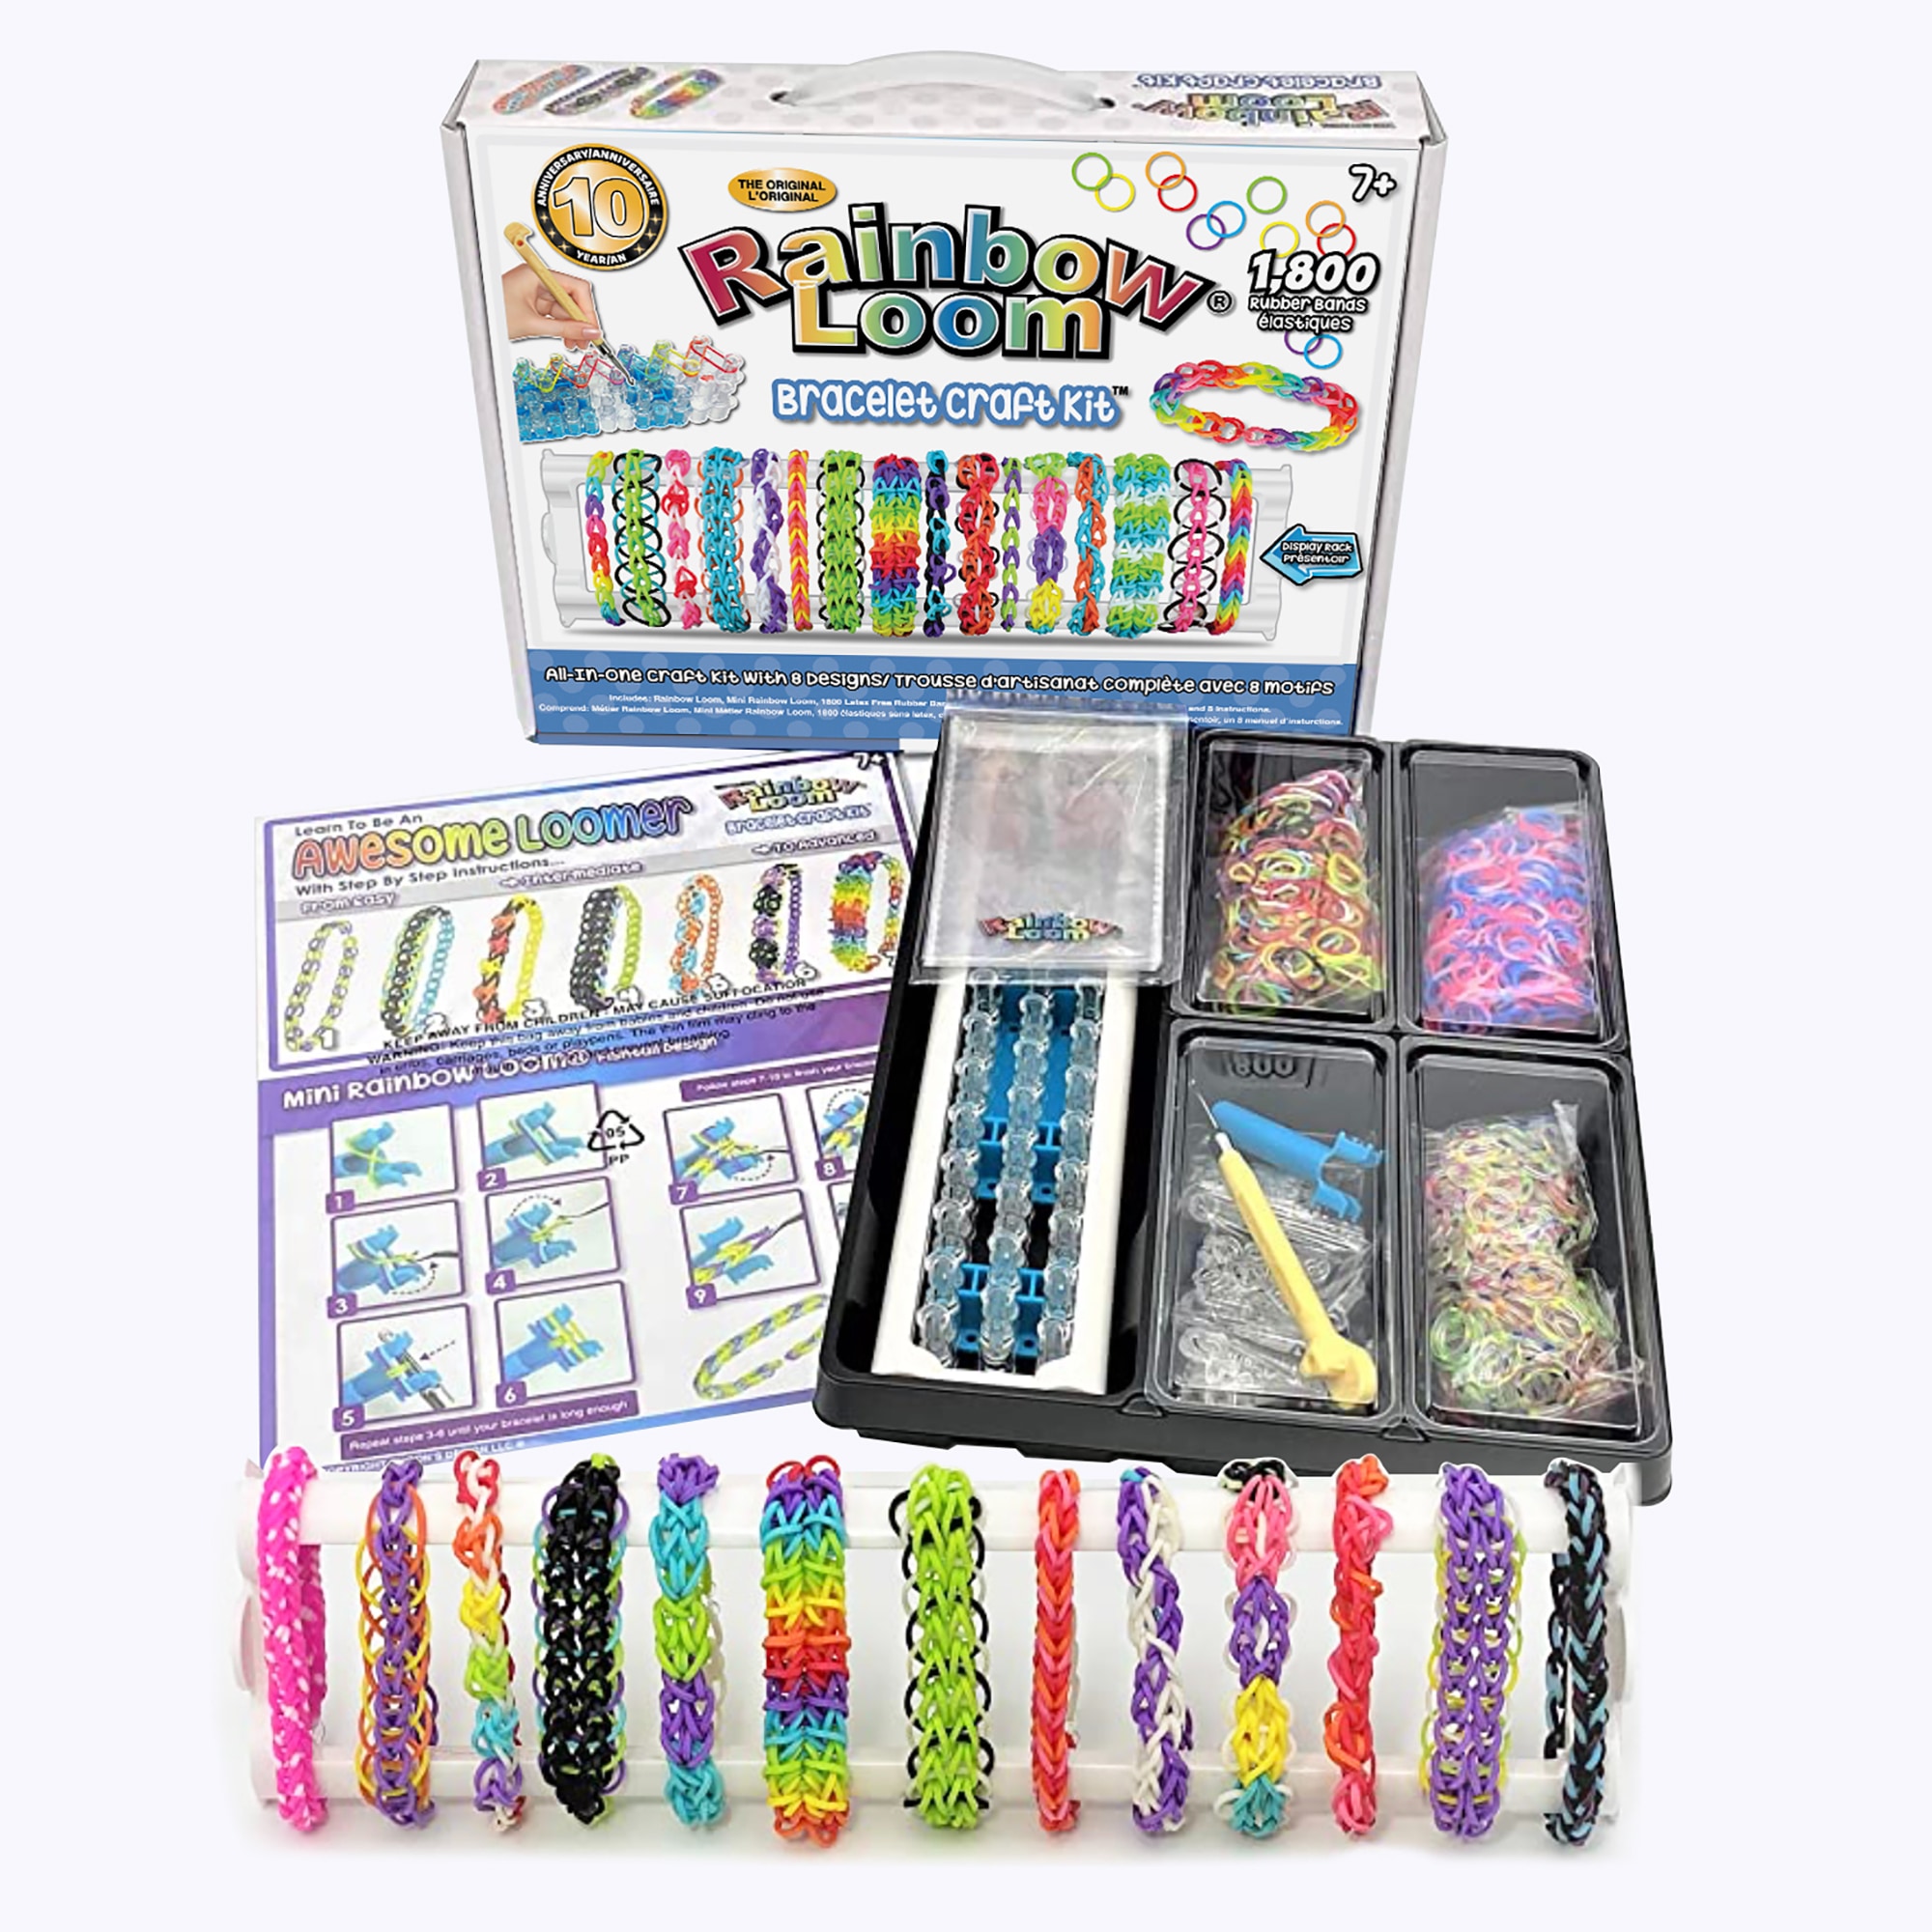 Rainbow Loom Creative Play Bracelet Craft Kit - Assorted Rubber